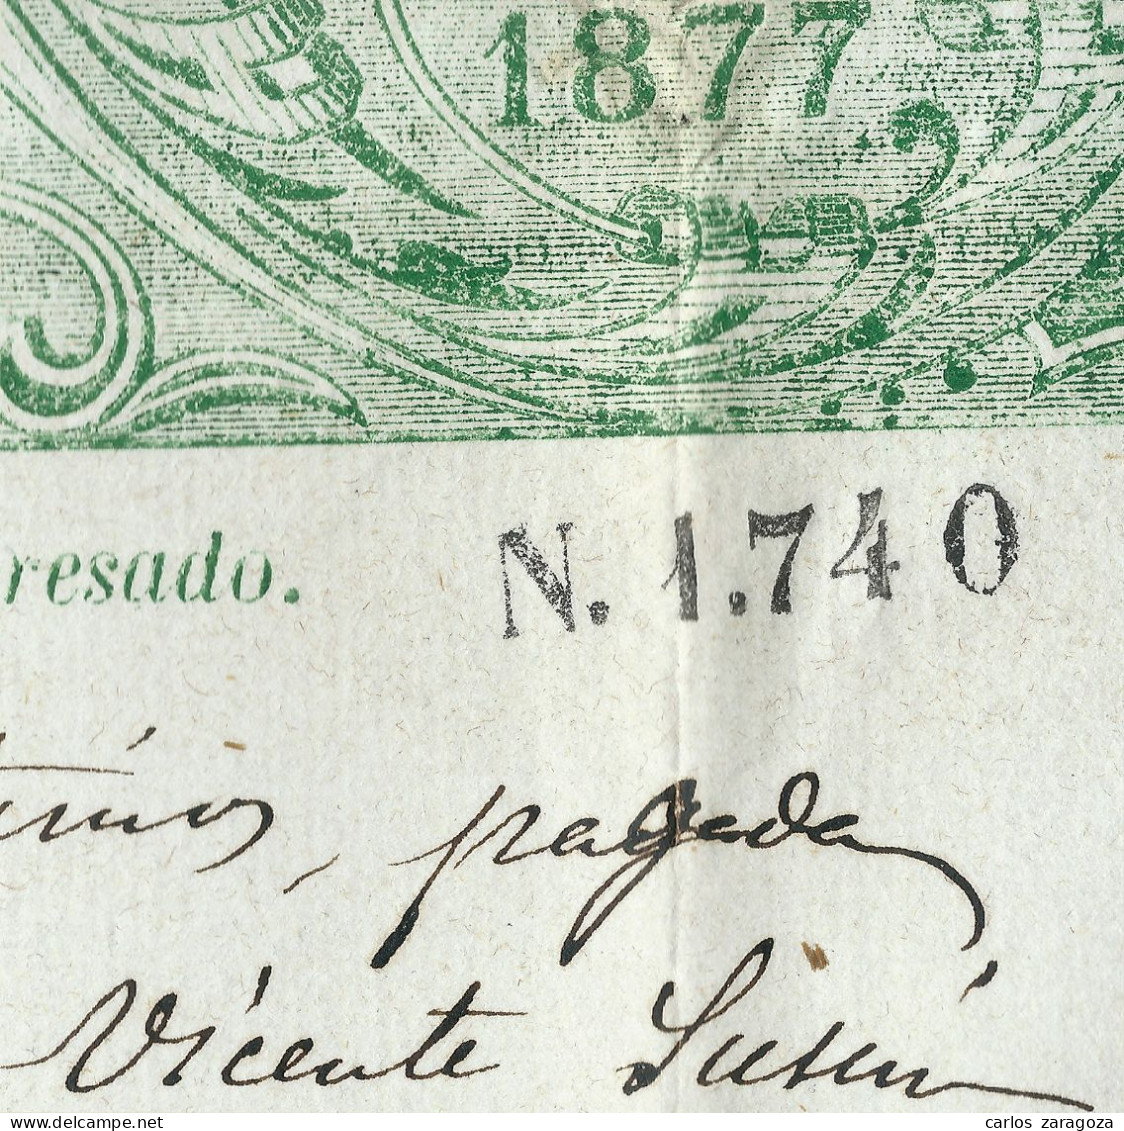 ESPAÑA 1877 — PAGOS AL ESTADO Serie B, 50 Cts — Sello Fiscal SOCIEDAD Del TIMBRE - Fiscale Zegels